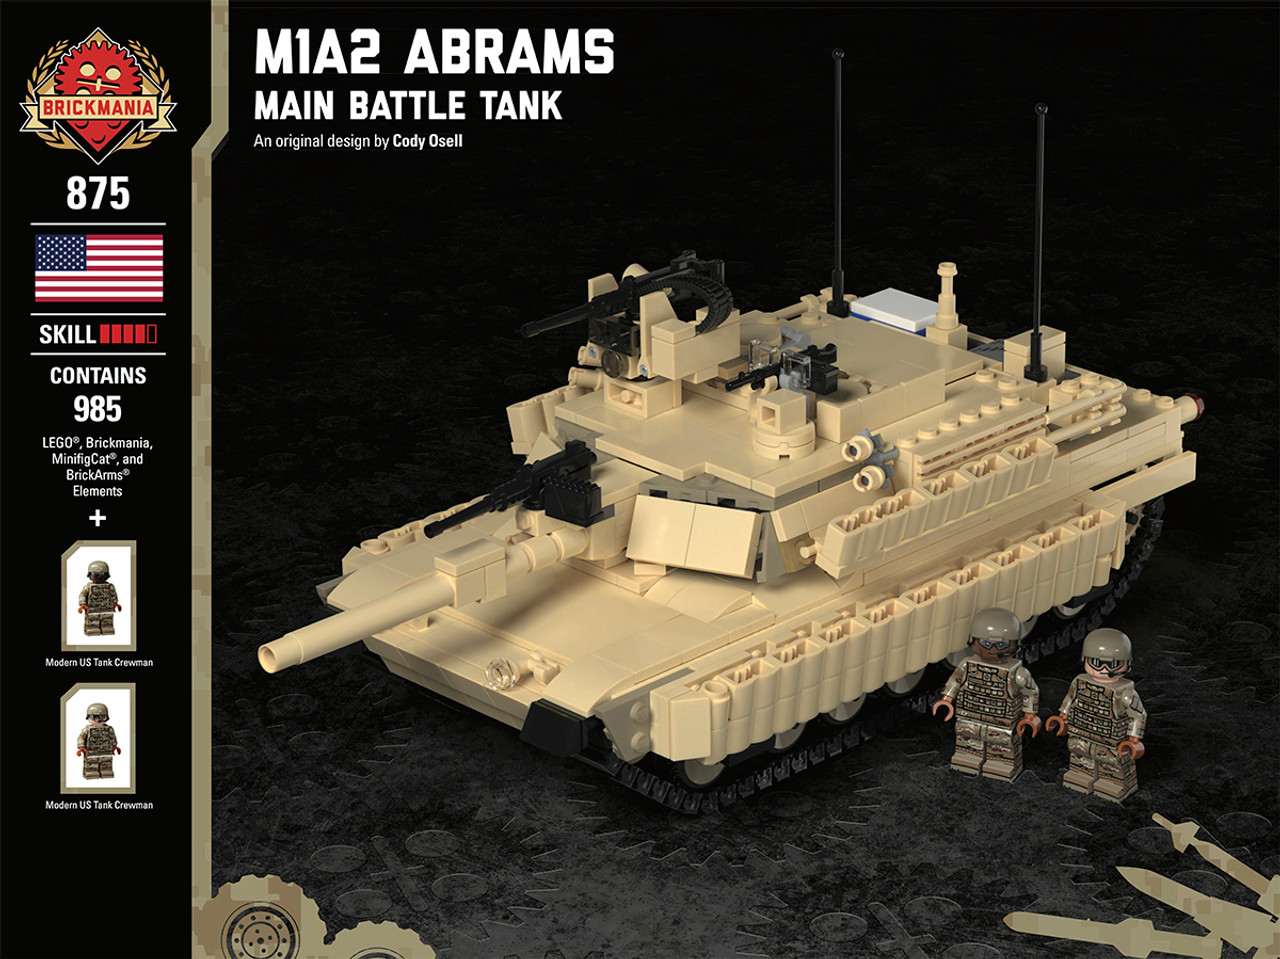 rc tank m1a2 abrams usa airsoft tank toy 16 military battle vehicle w sound